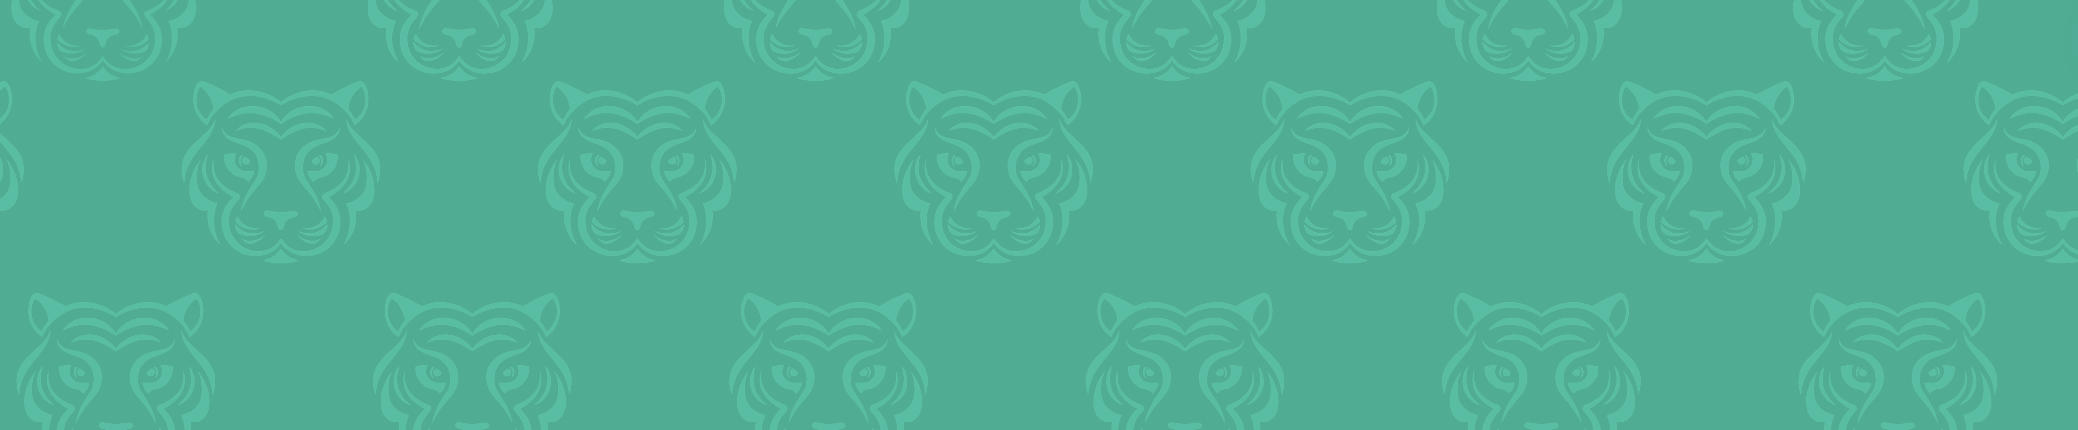 Tiger pattern banner